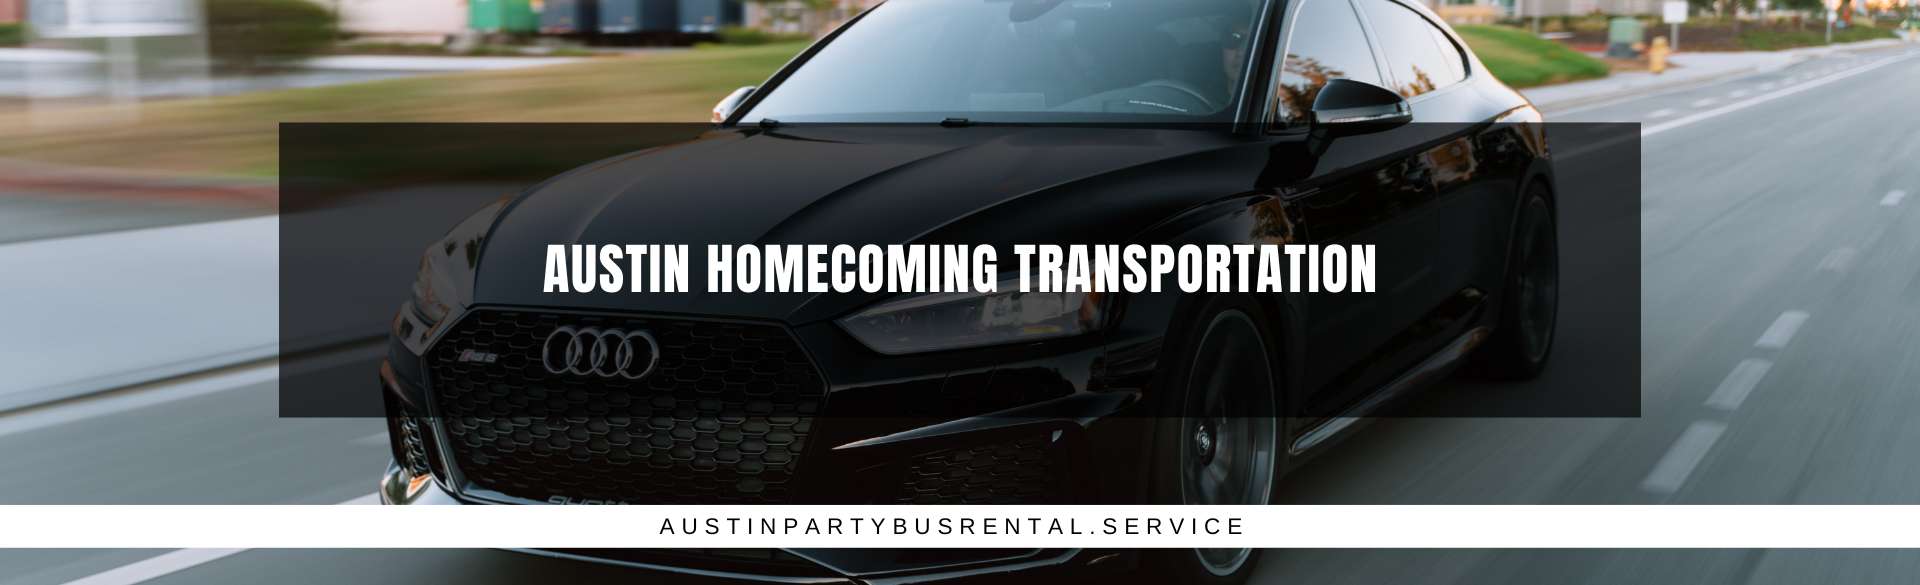 Austin Homecoming Transportation